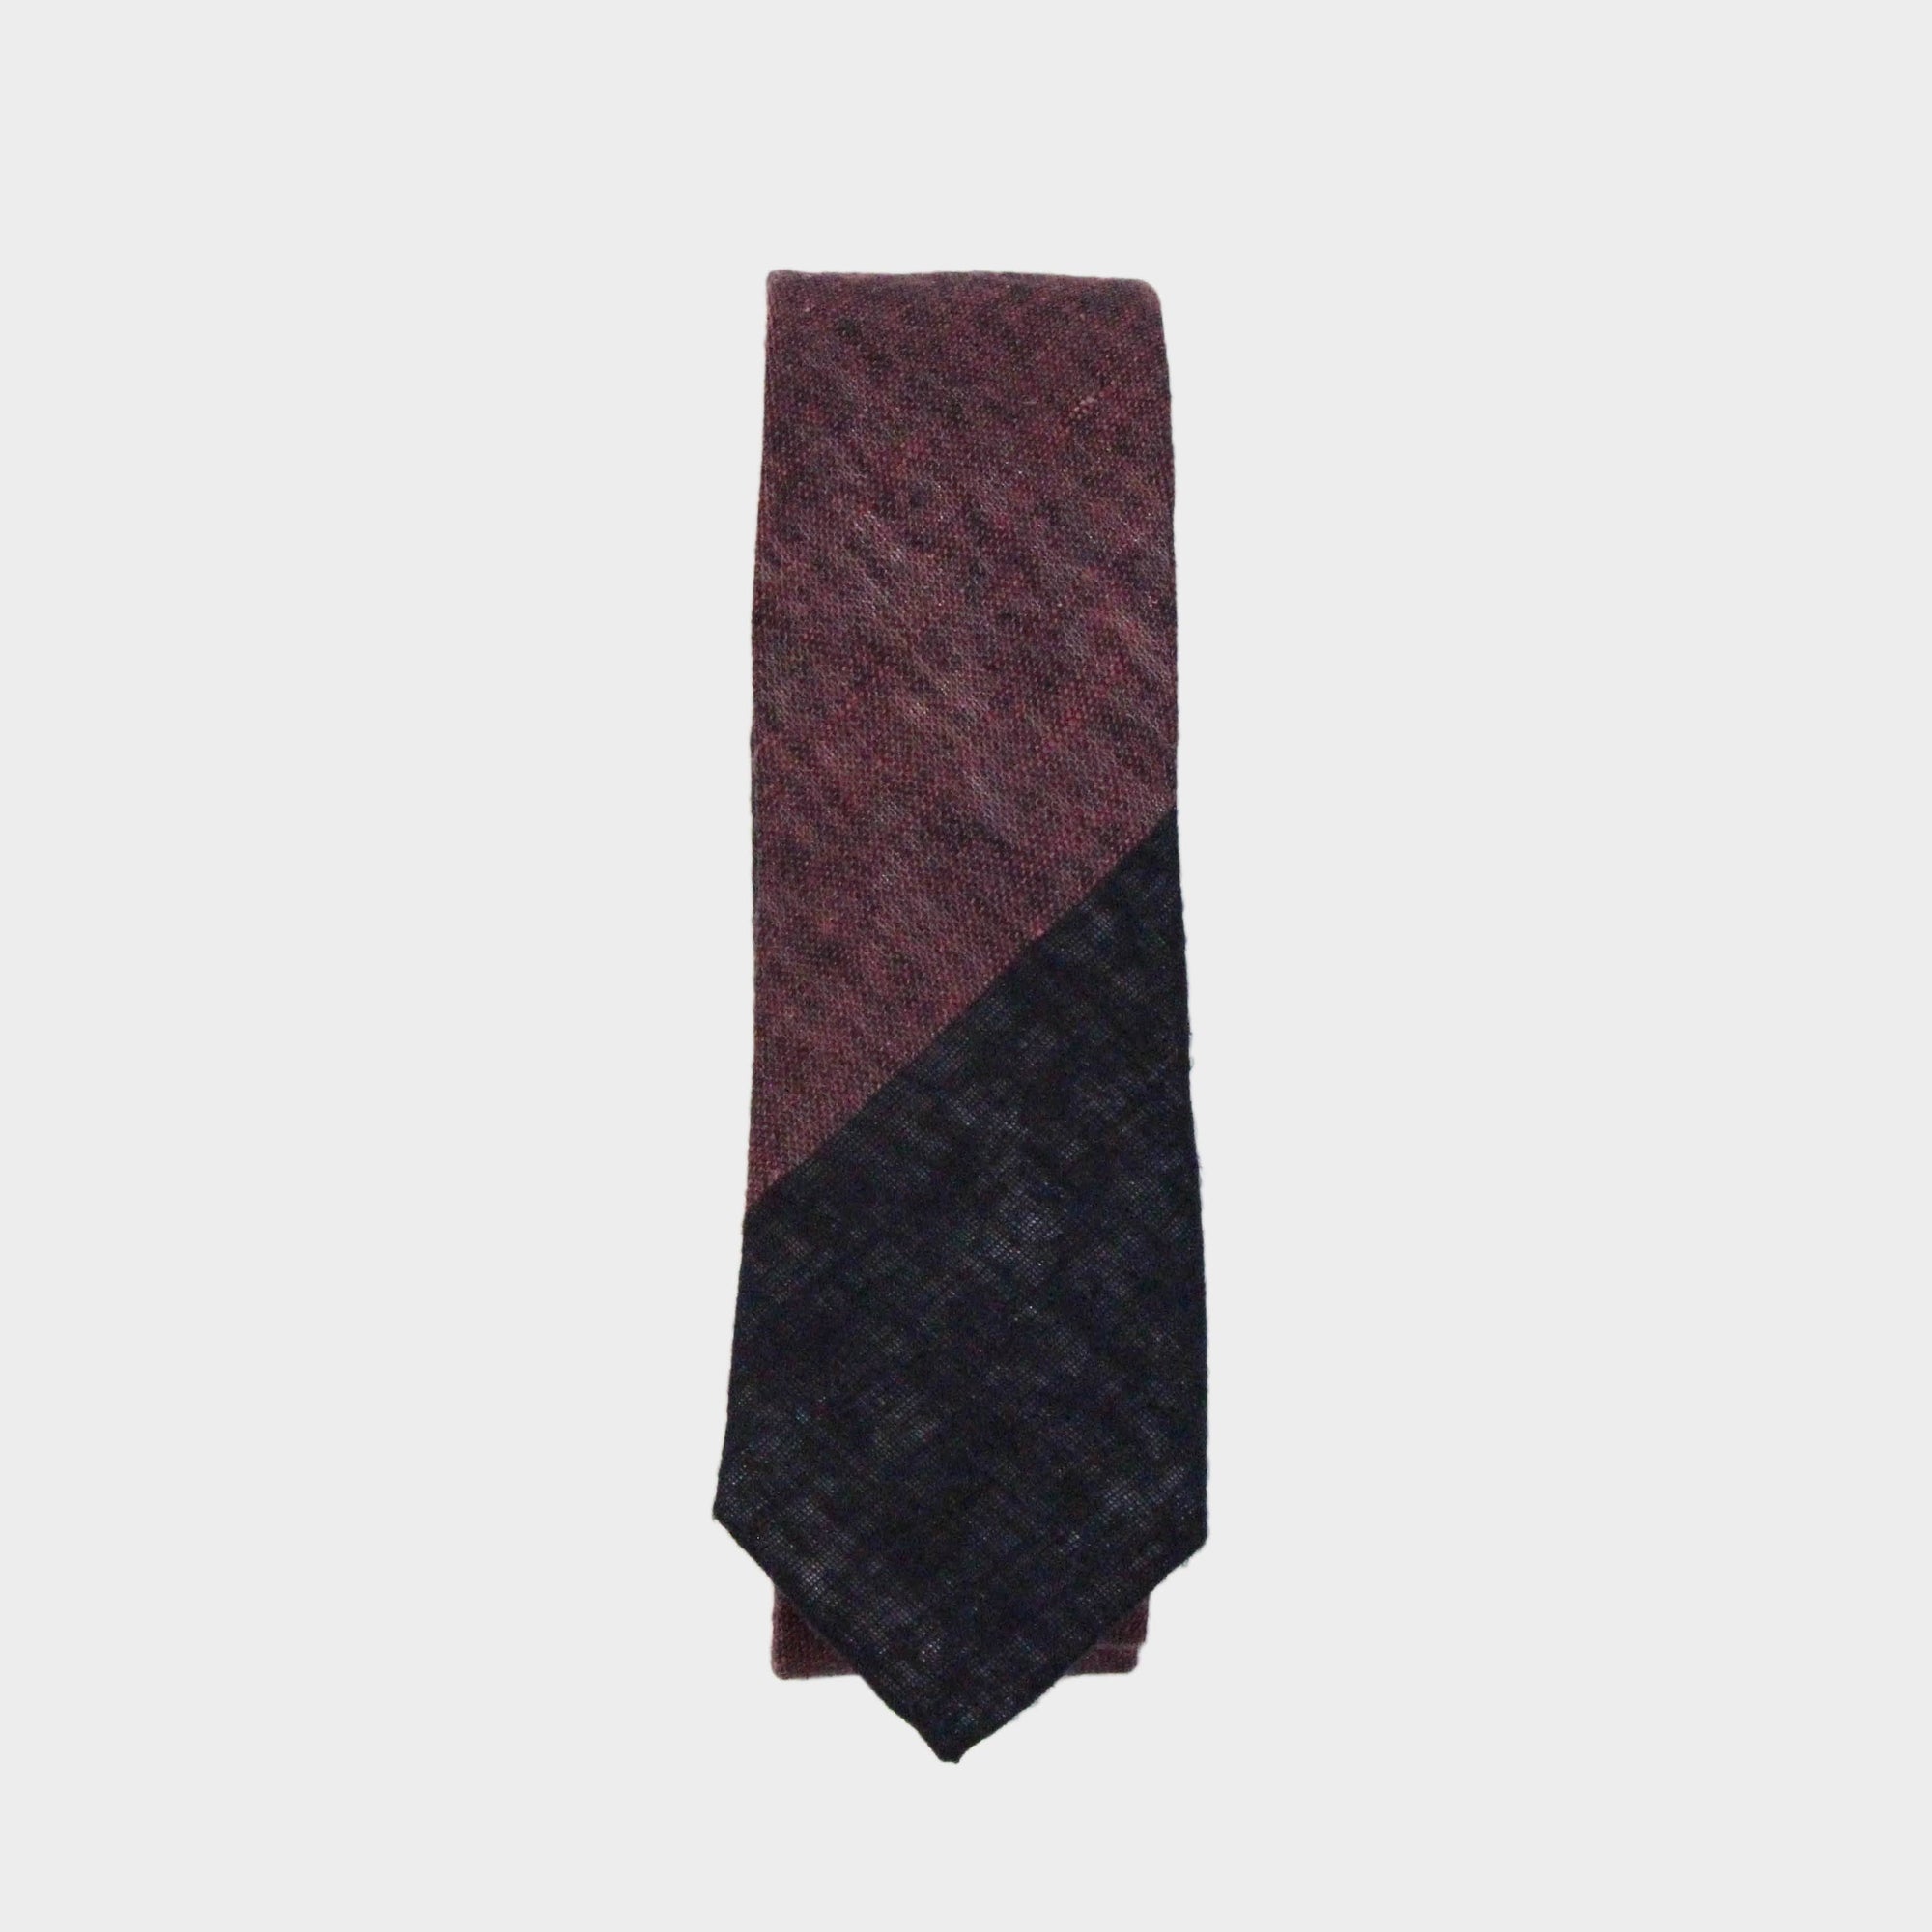 COLTON - Men's Tie